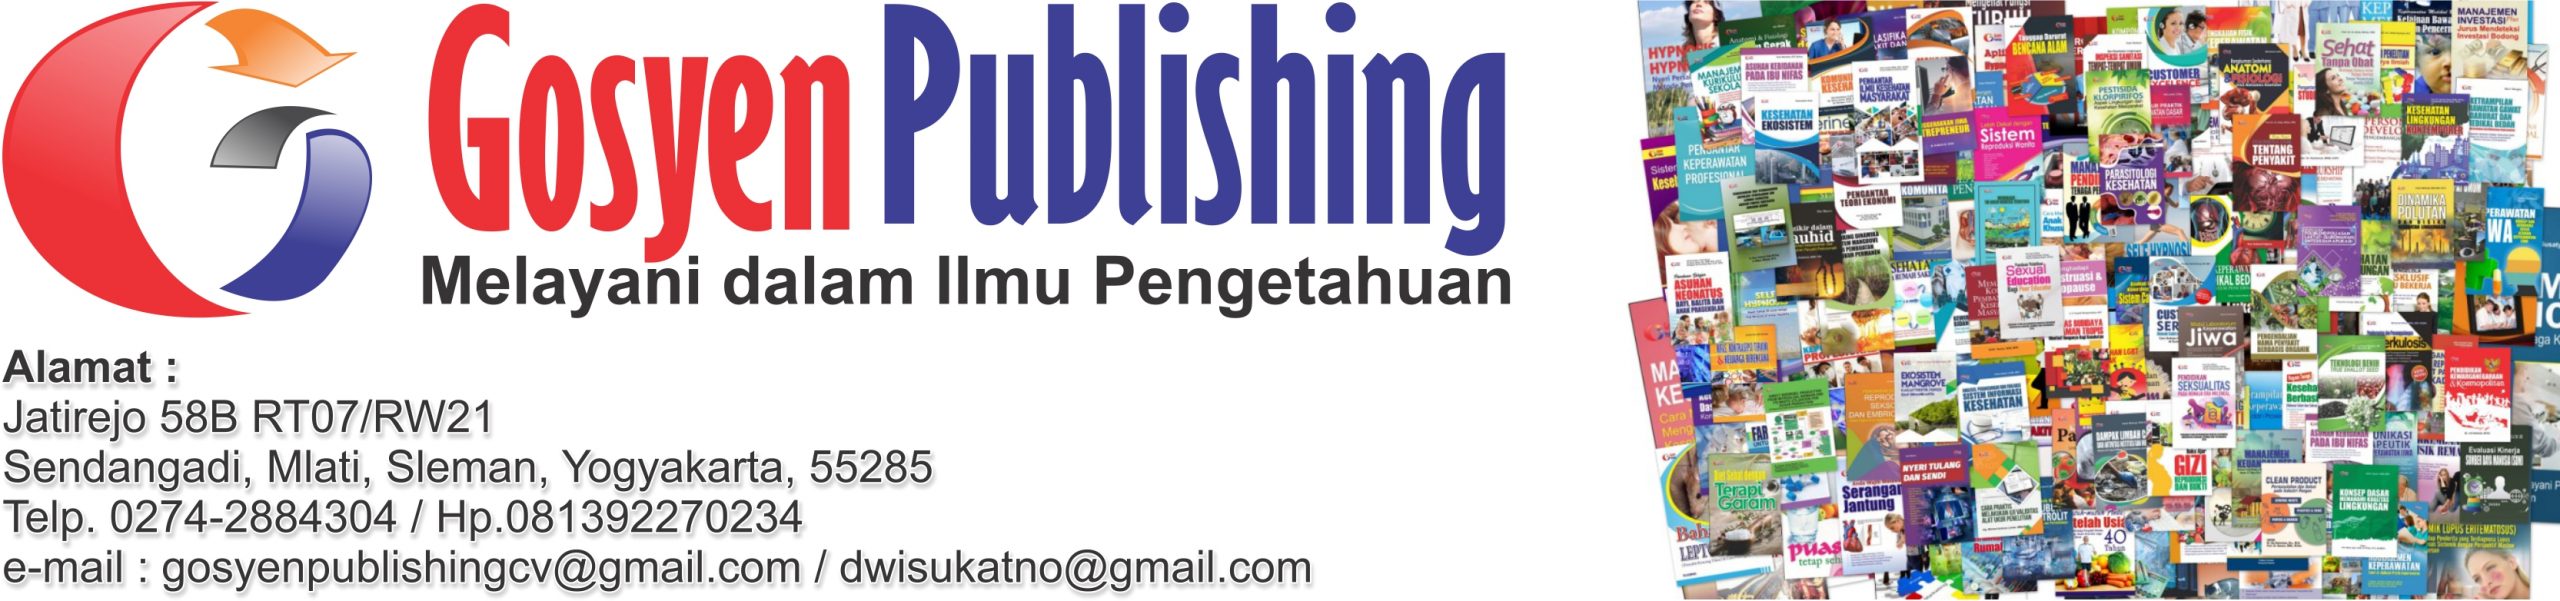 Gosyen Publishing